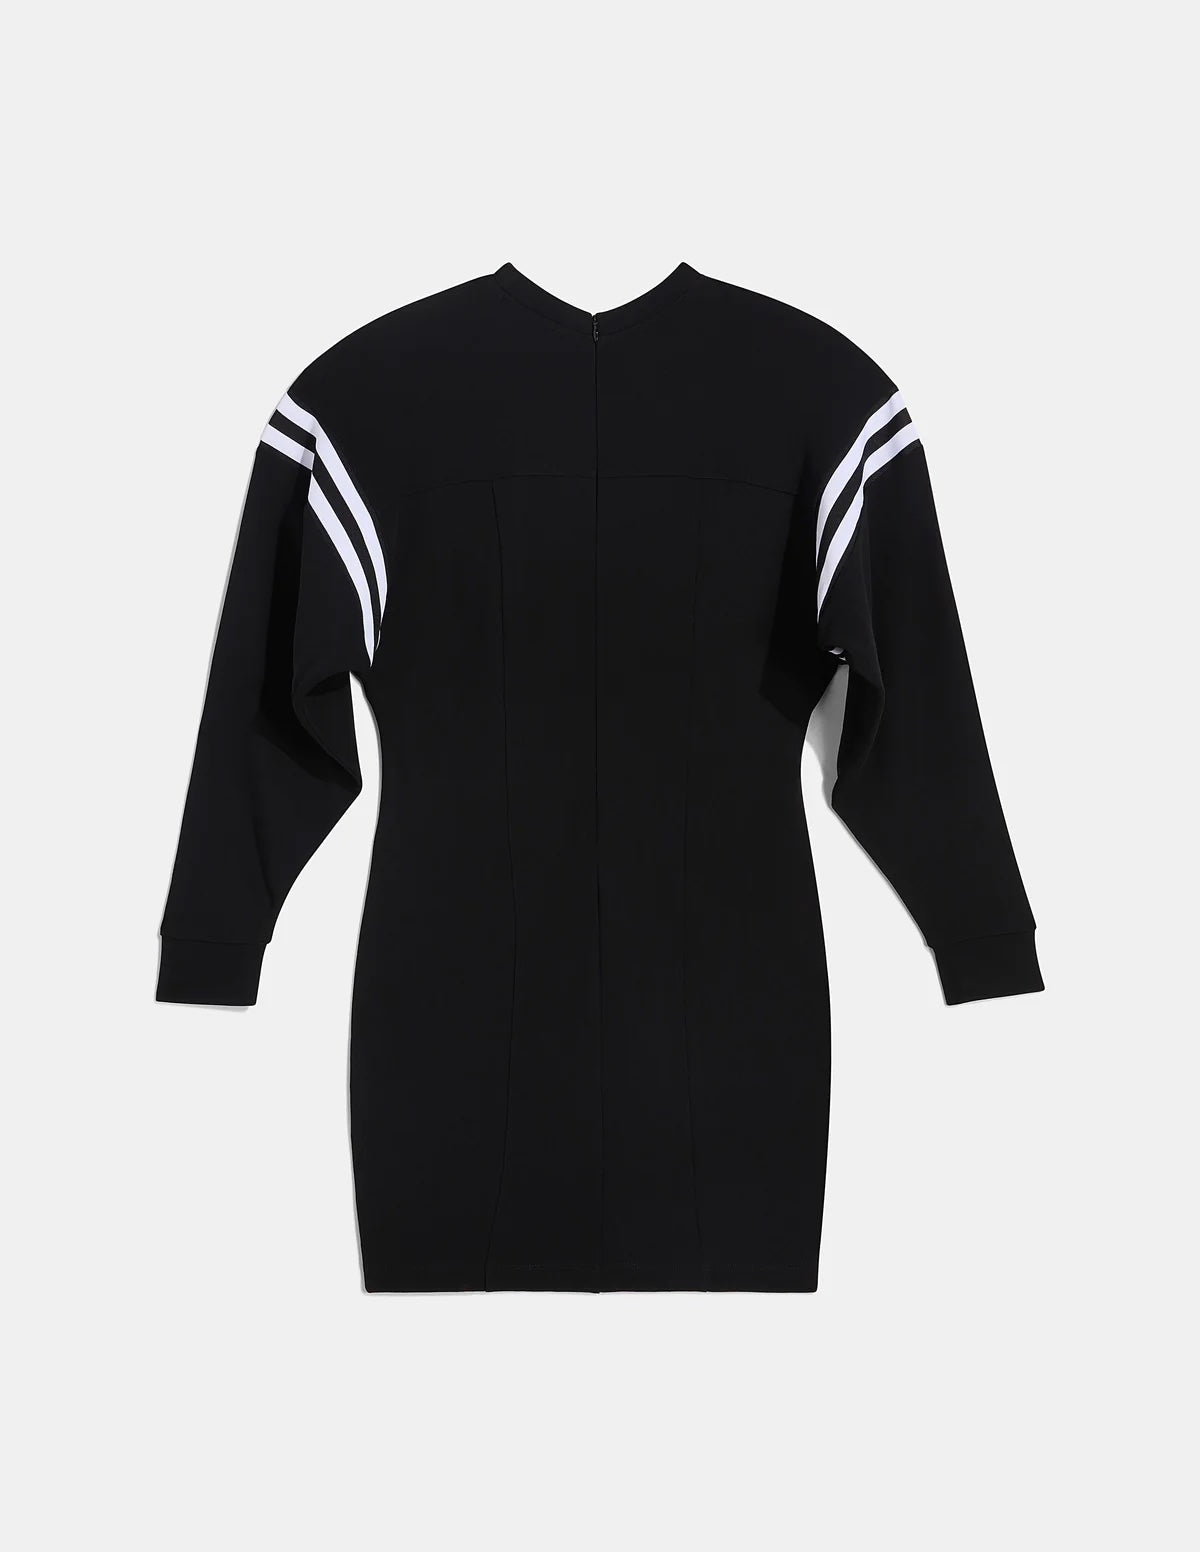 GSTQ Athletic Dress, Black